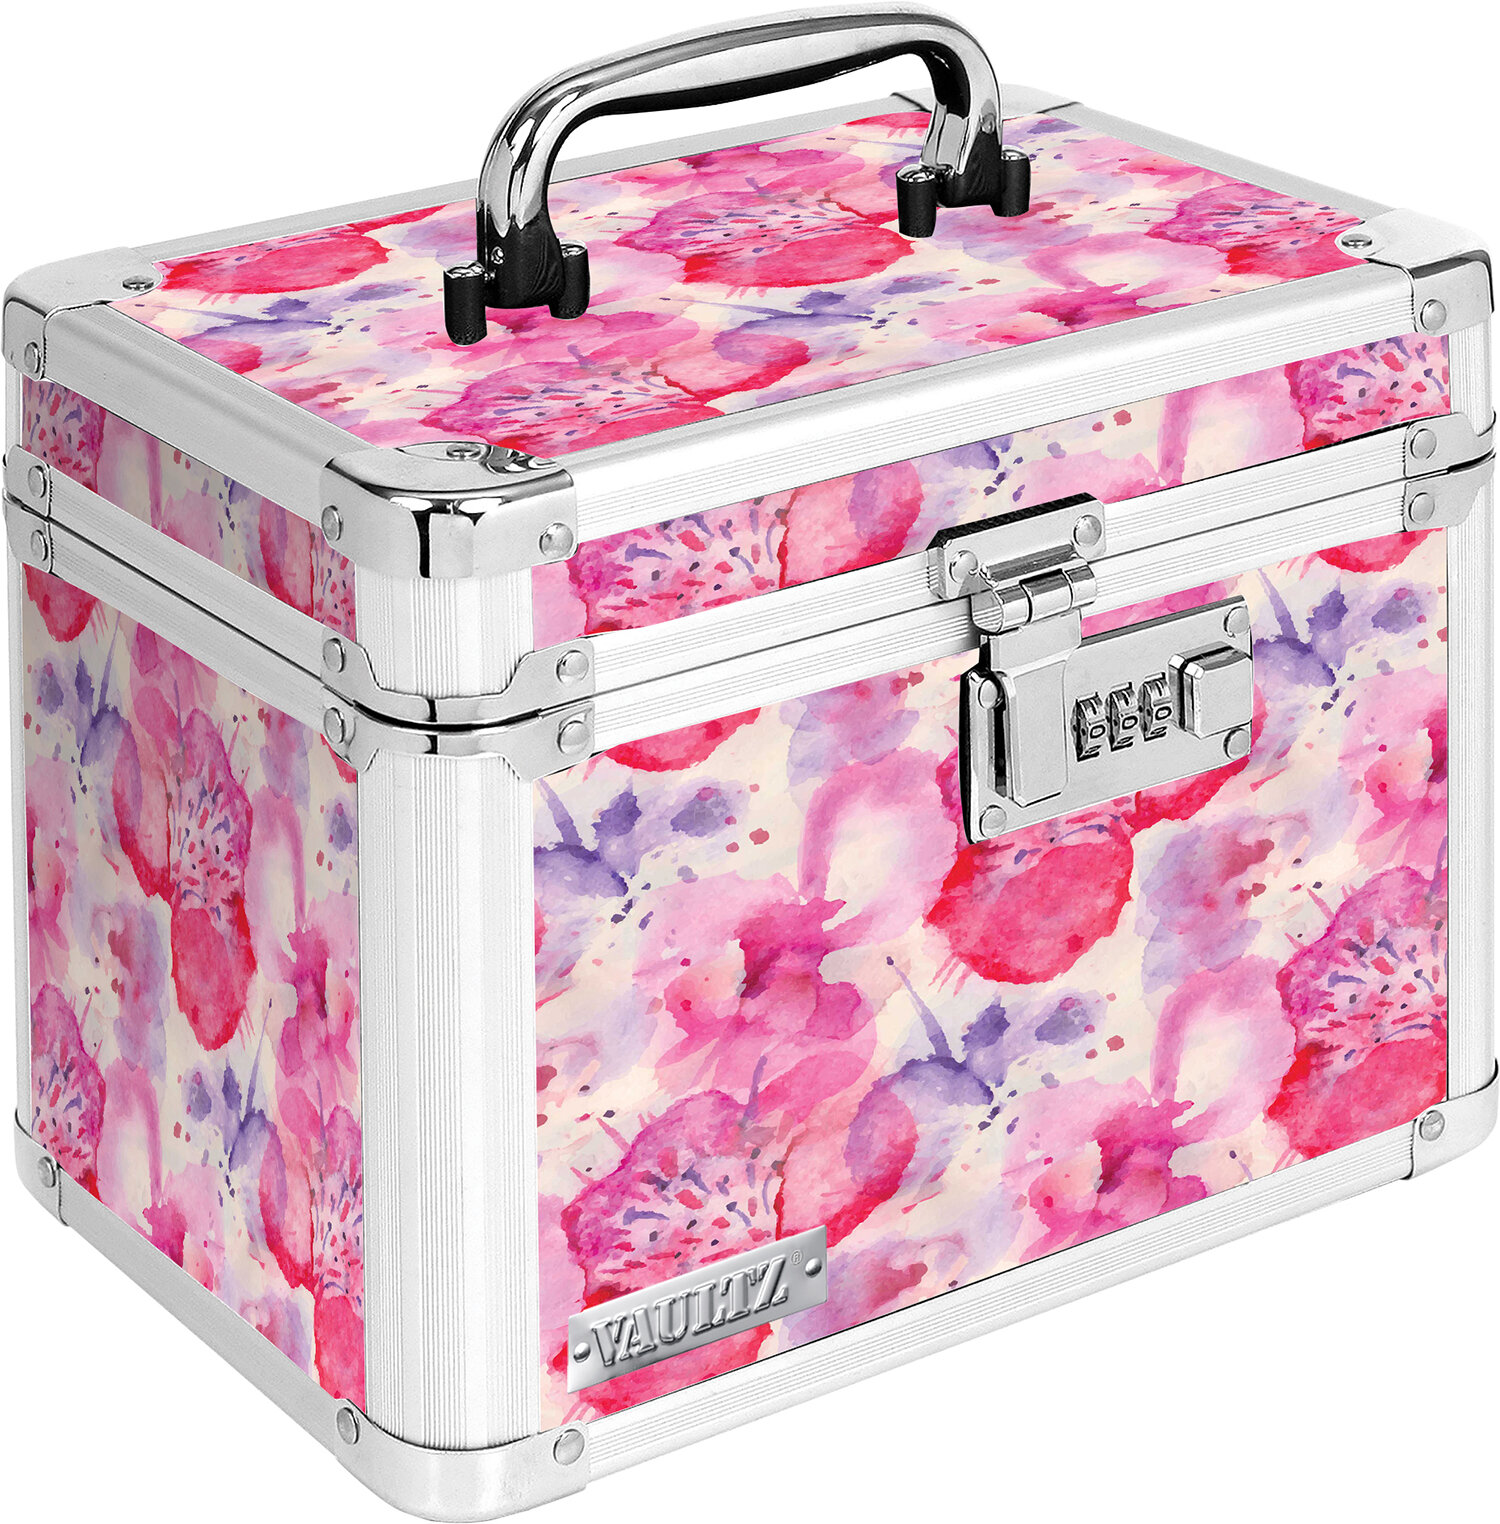  Vesta Safe Bag for Women, Pill Combination Lock Box